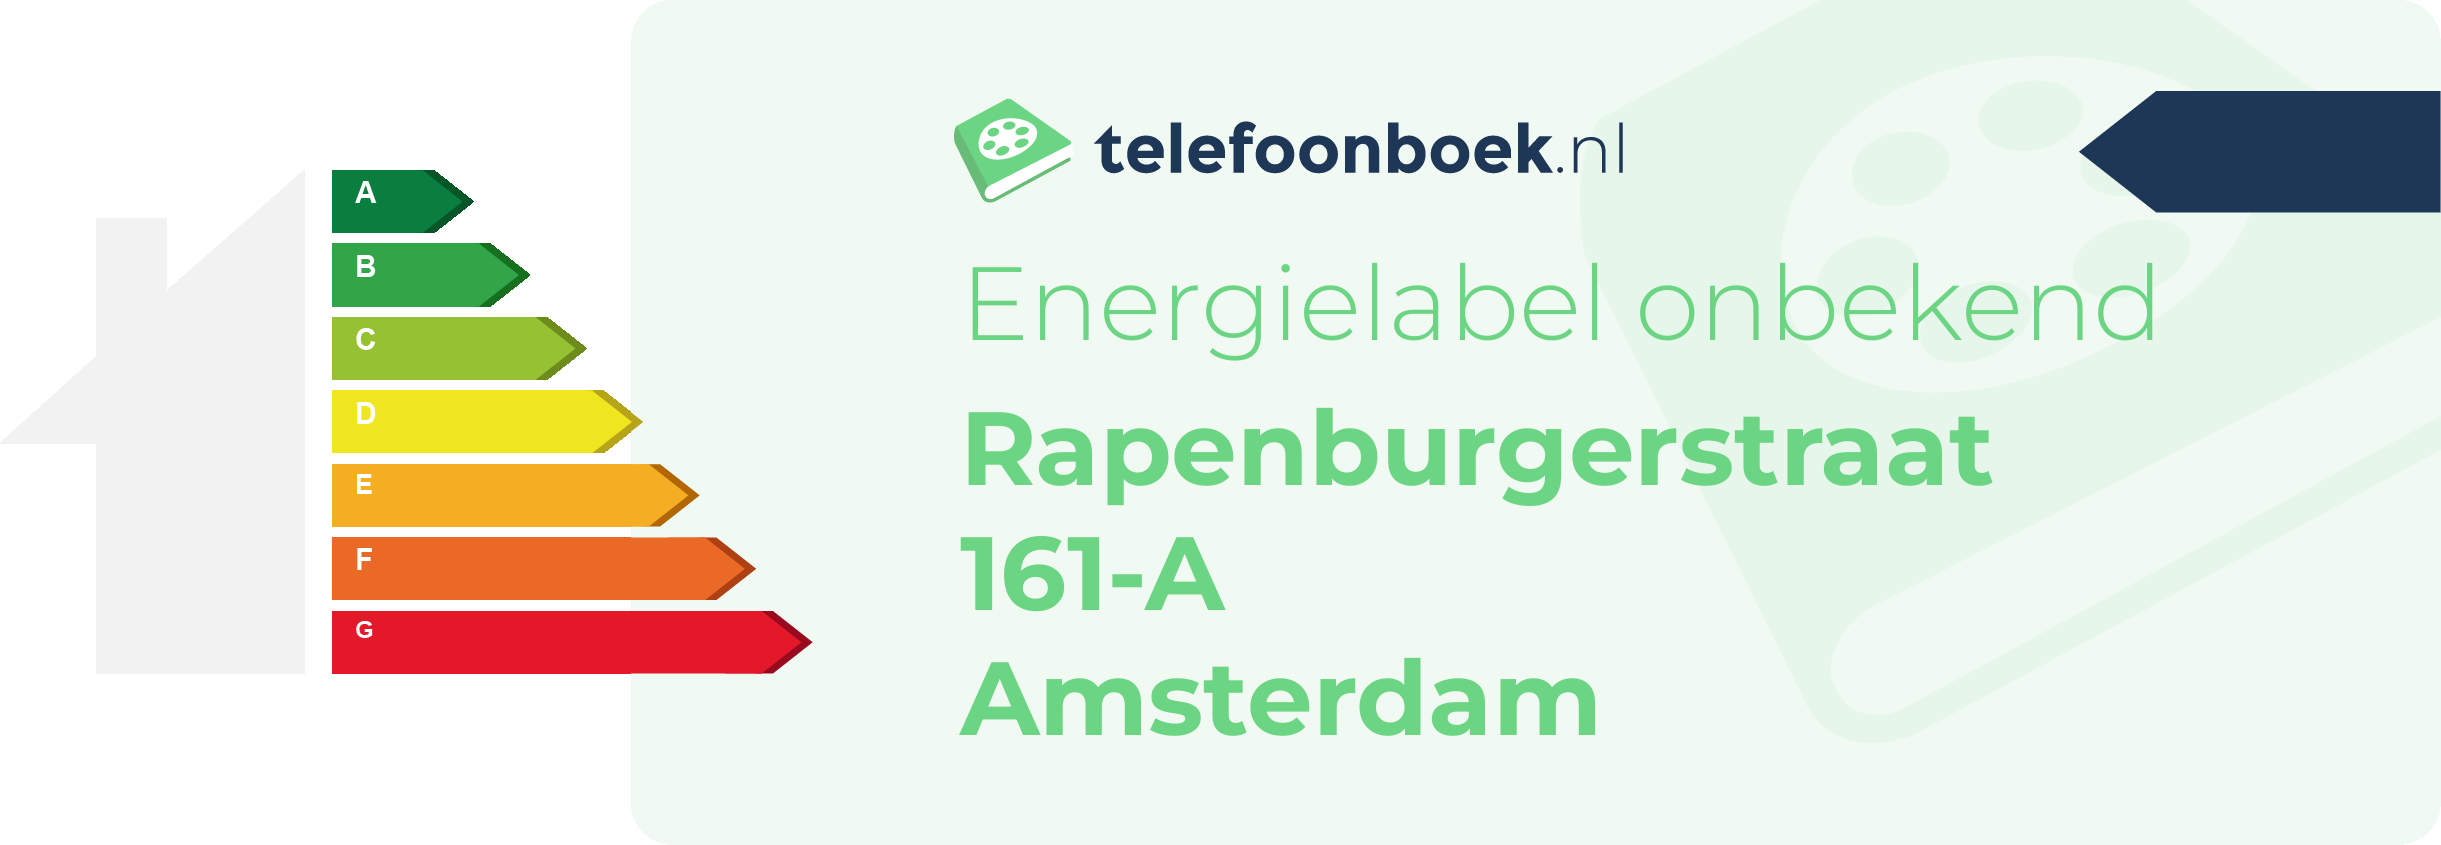 Energielabel Rapenburgerstraat 161-A Amsterdam